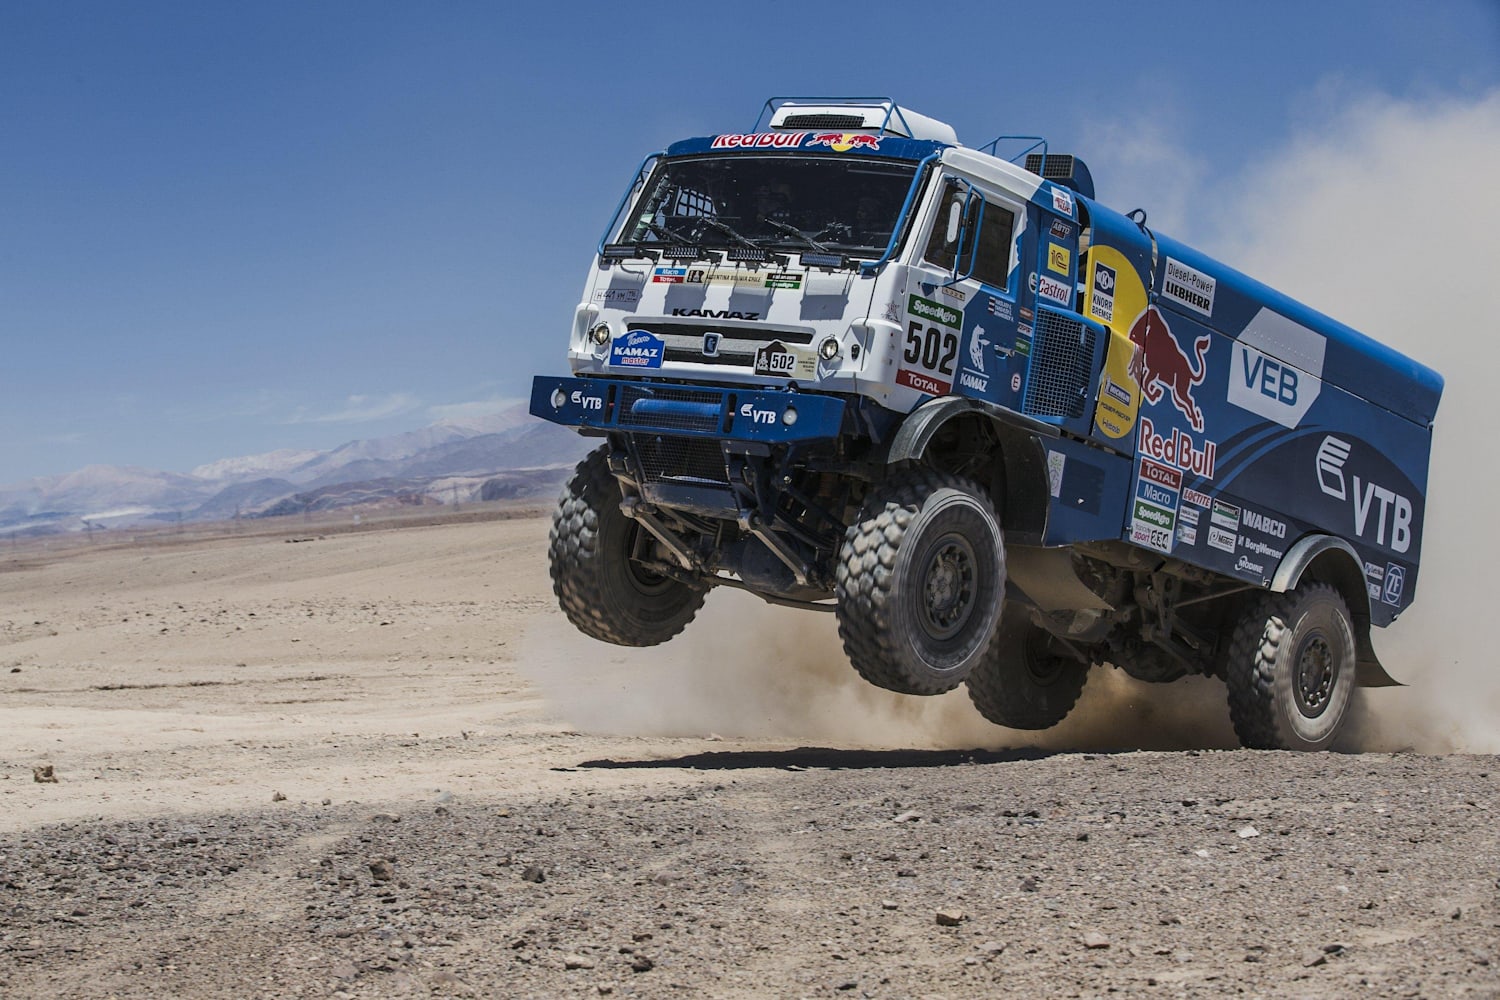 Dakar Rally These machines can take on any terrain